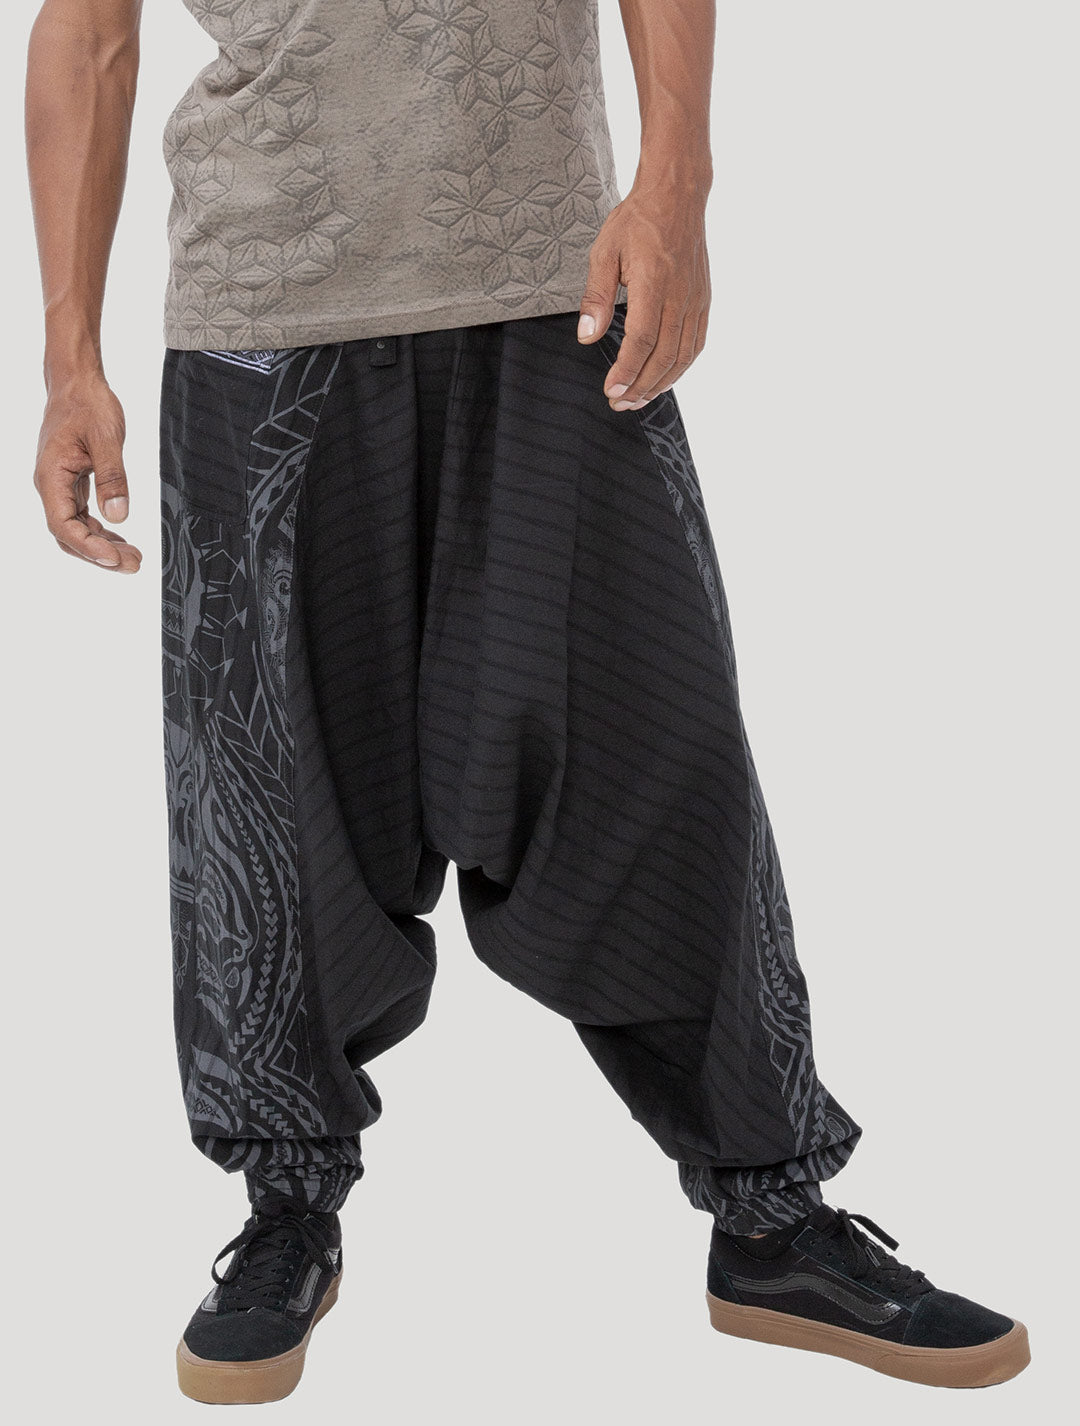 Whitewhale Mens Cotton Printed Harem Pants Pockets Yoga Trousers Hippi